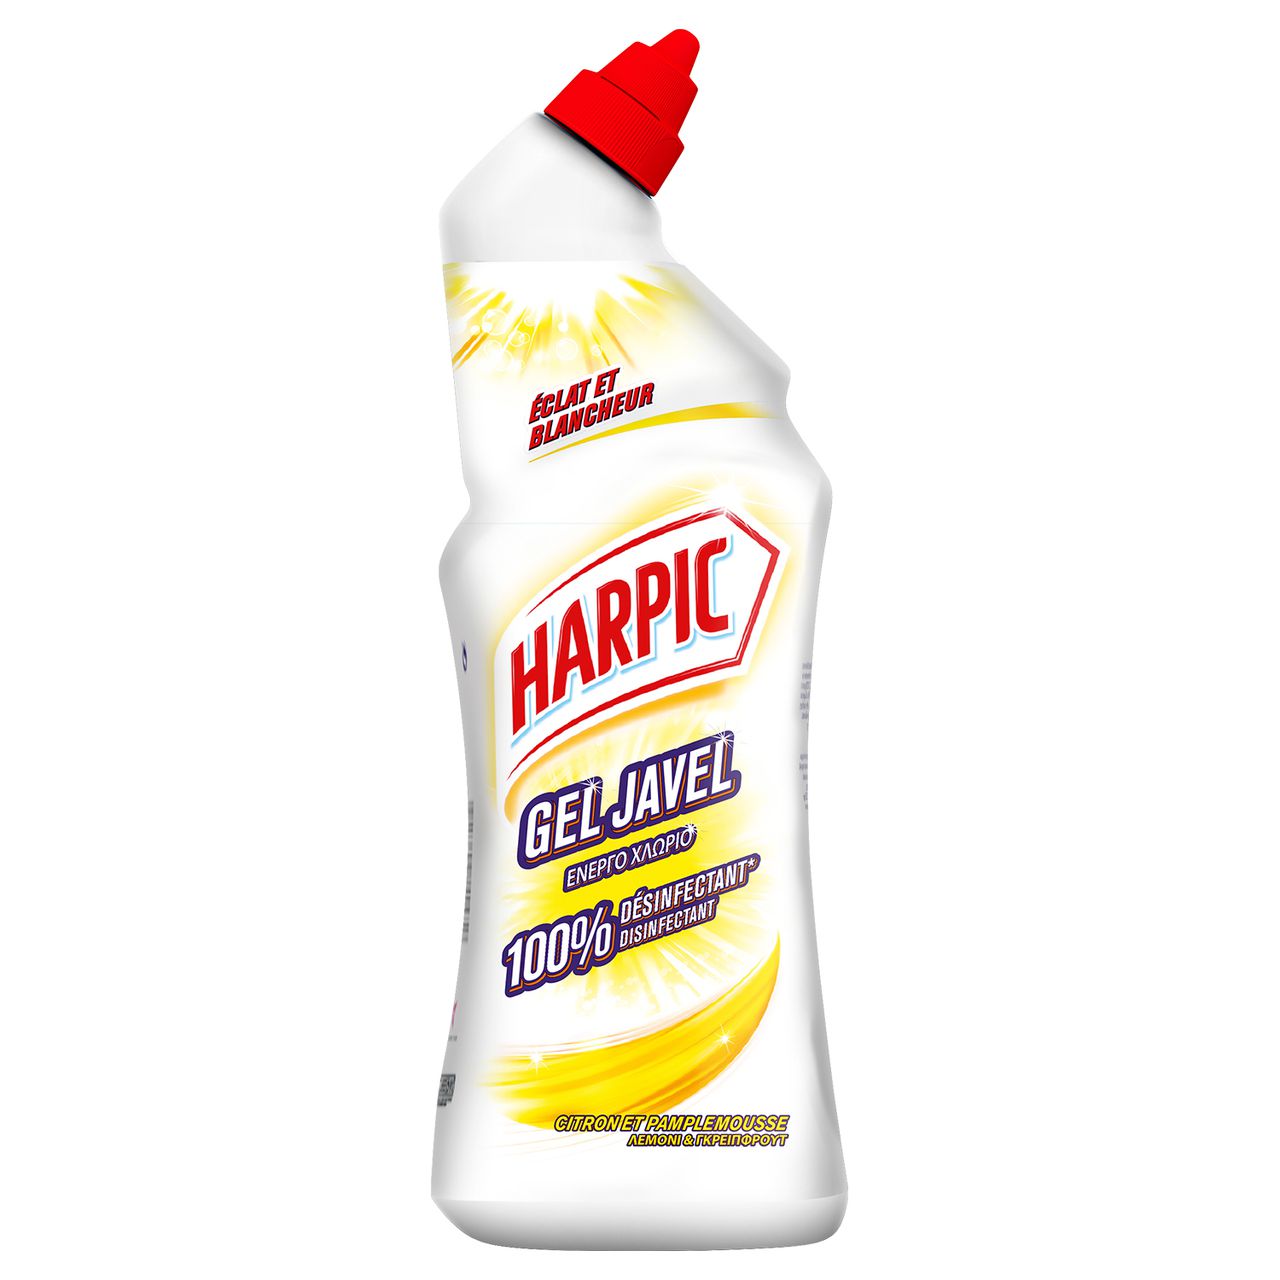 Harpic nettoyant WC gel javel fresh citron et pamplemousse - E-S